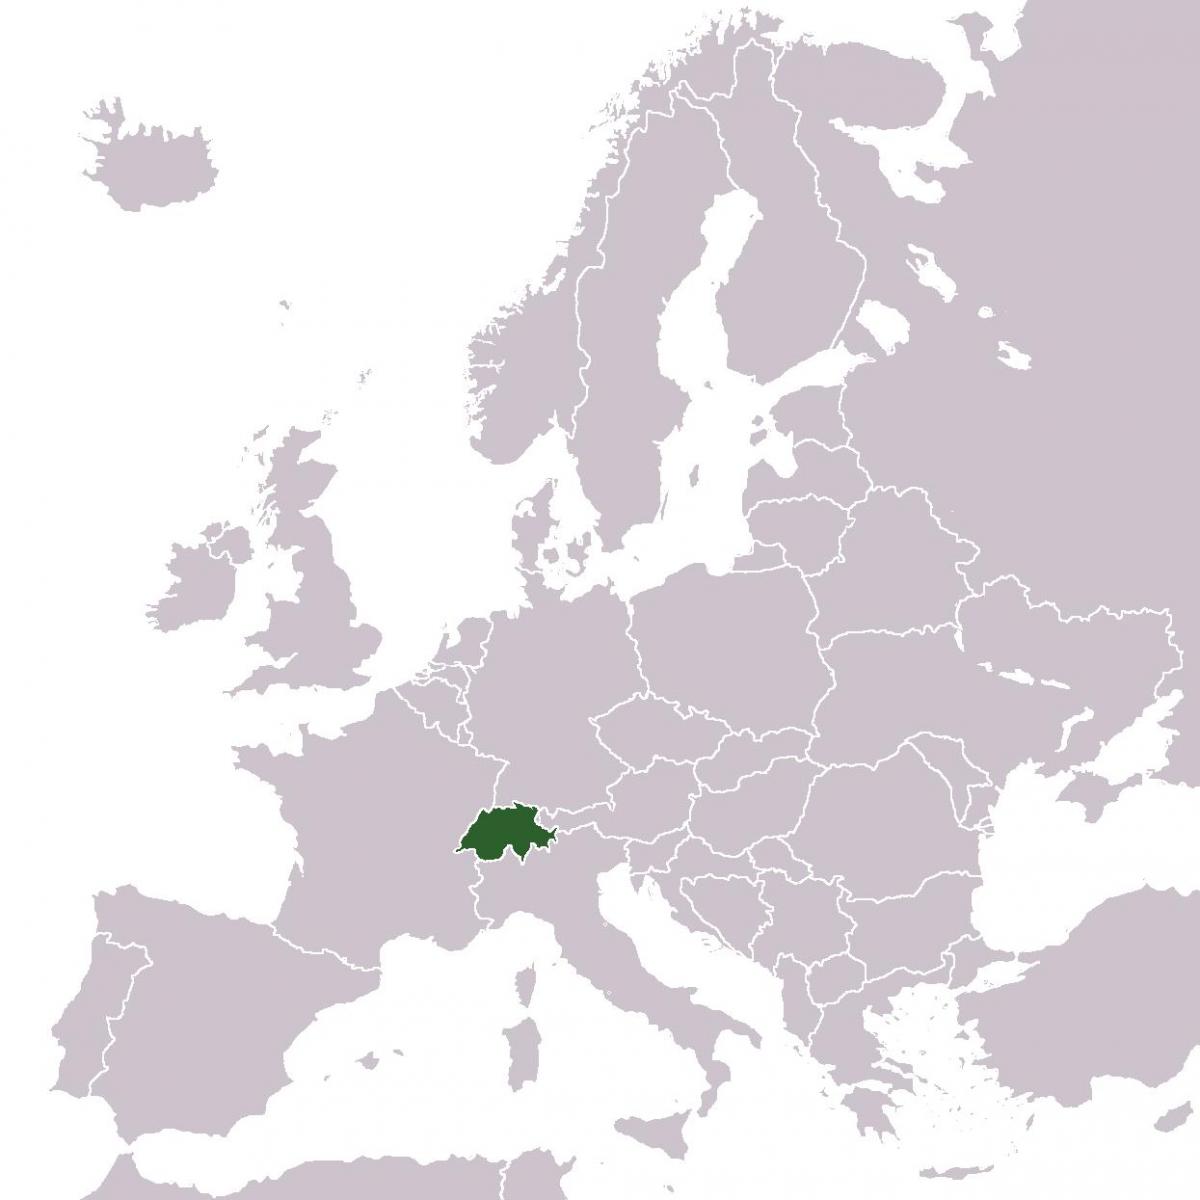 switzerland location in europe map